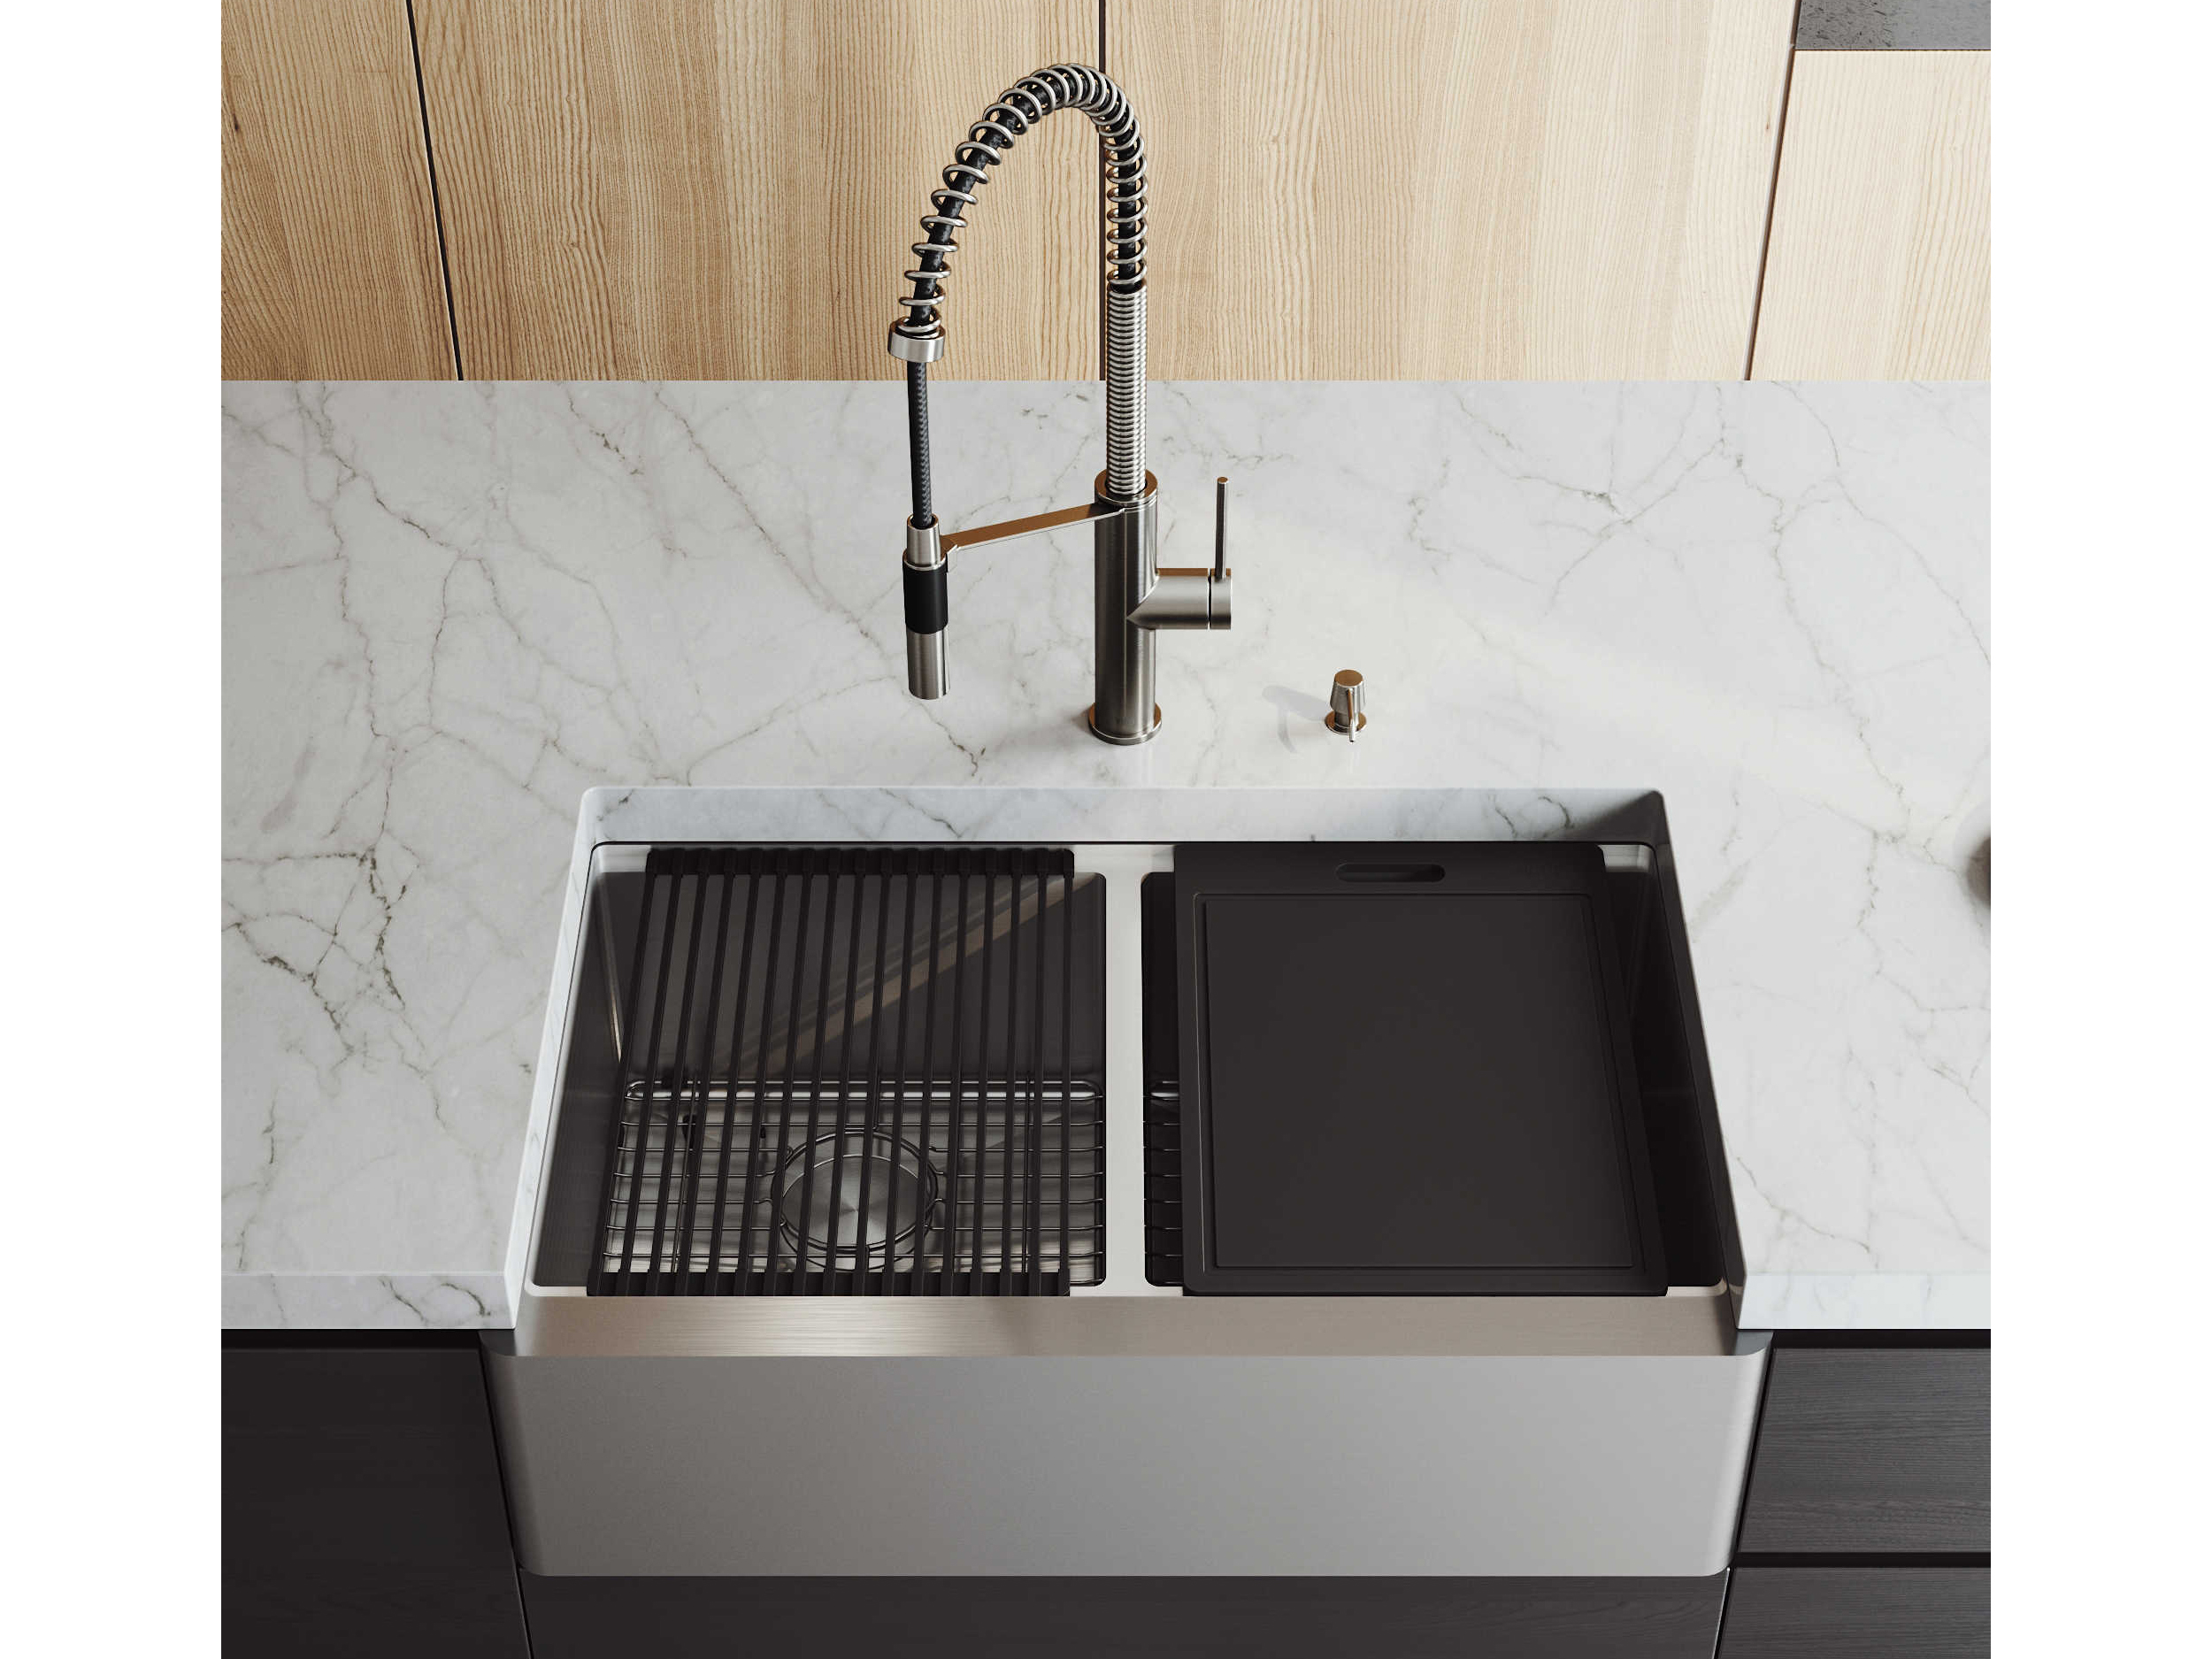 vigo farmhouse stainless steel kitchen sink faucet and dispenser